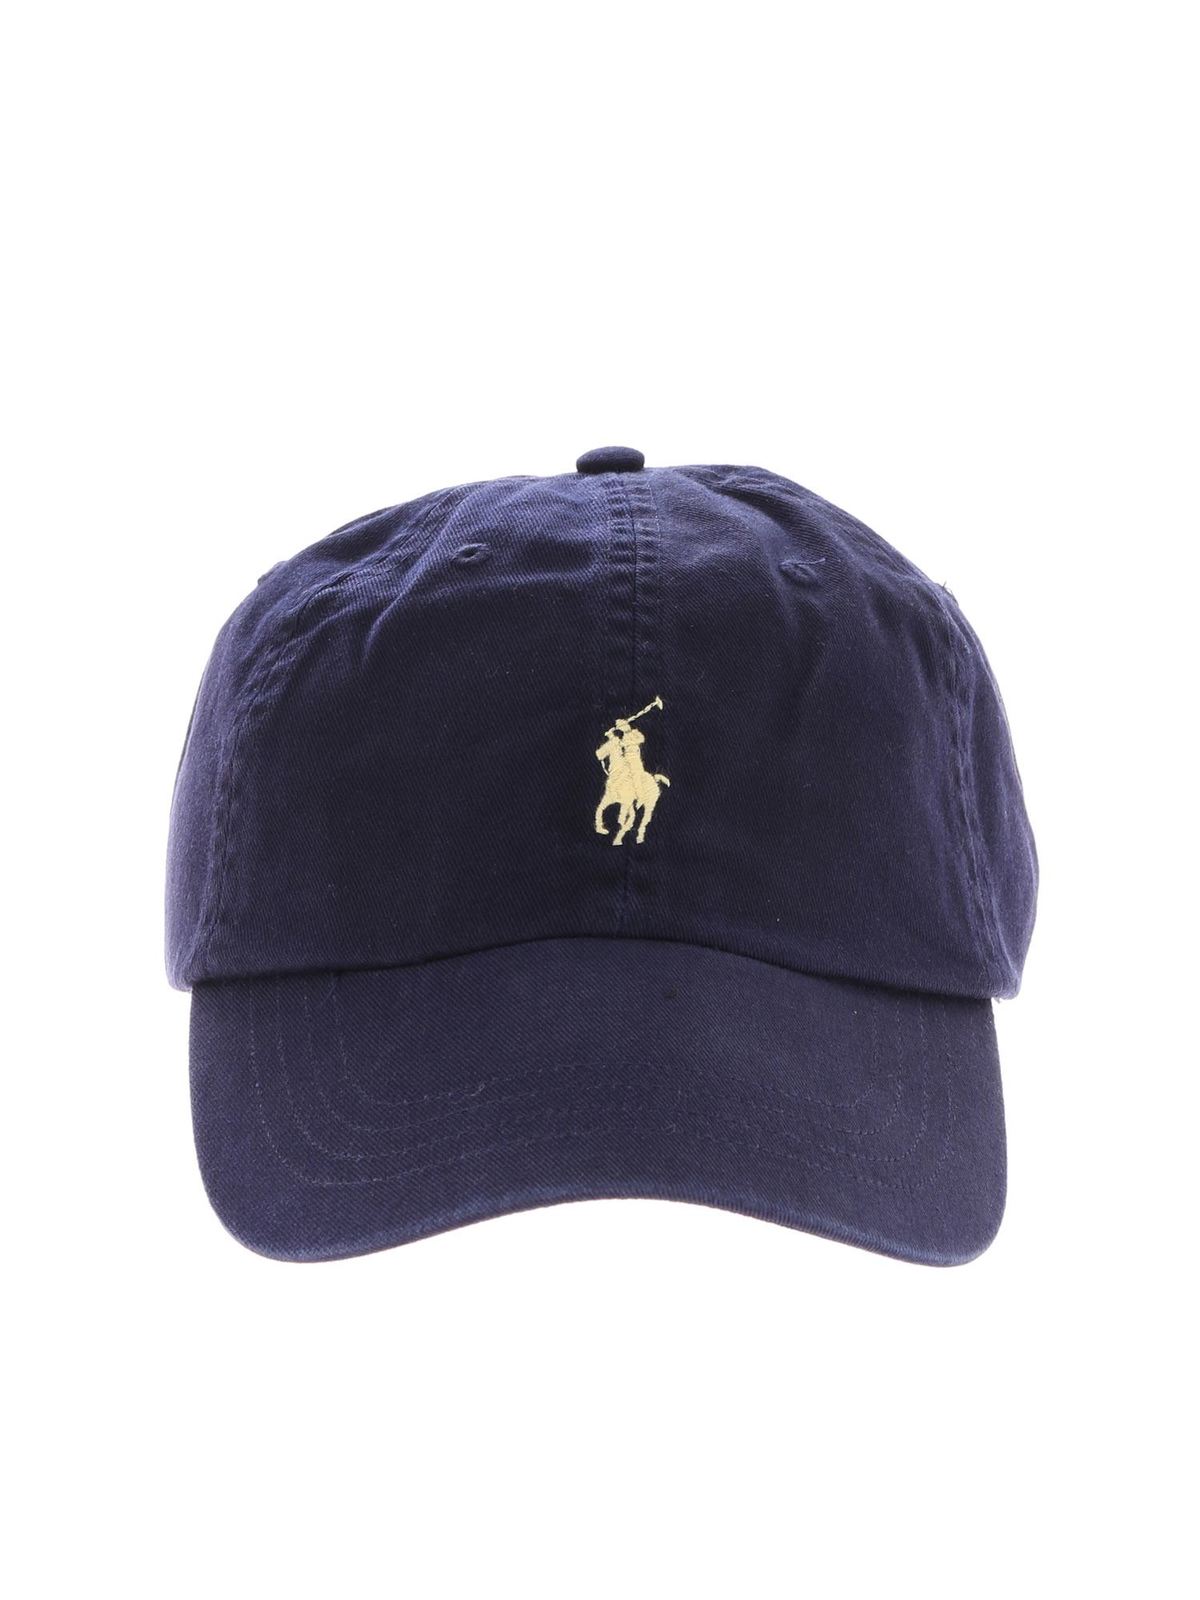 Hats & caps Polo Ralph Lauren - Logo embroidery baseball cap - 710548524006